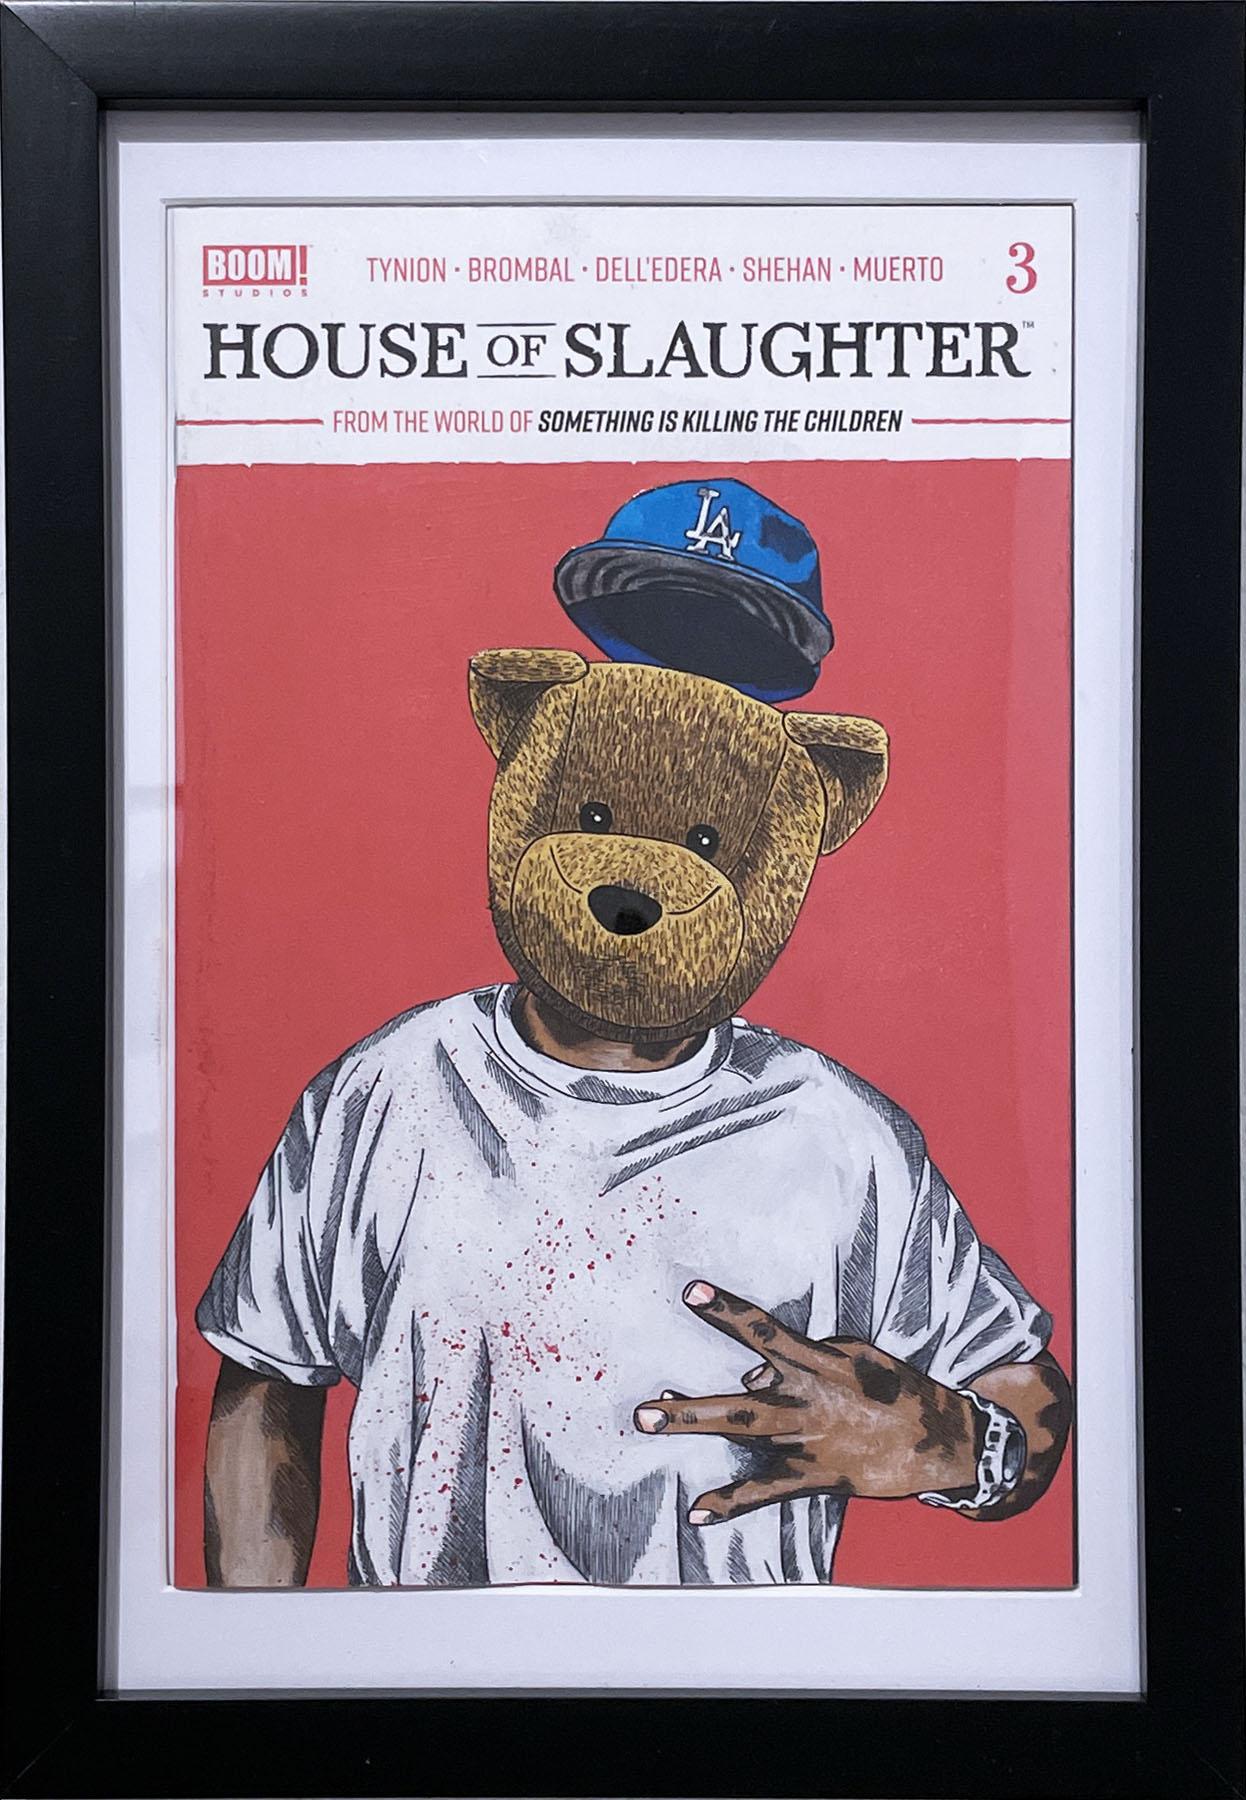 Sean 9 Lugo Portrait - House of Slaughter (2021) by Sean9 Lugo, comic book portrait of rapper Crooked I